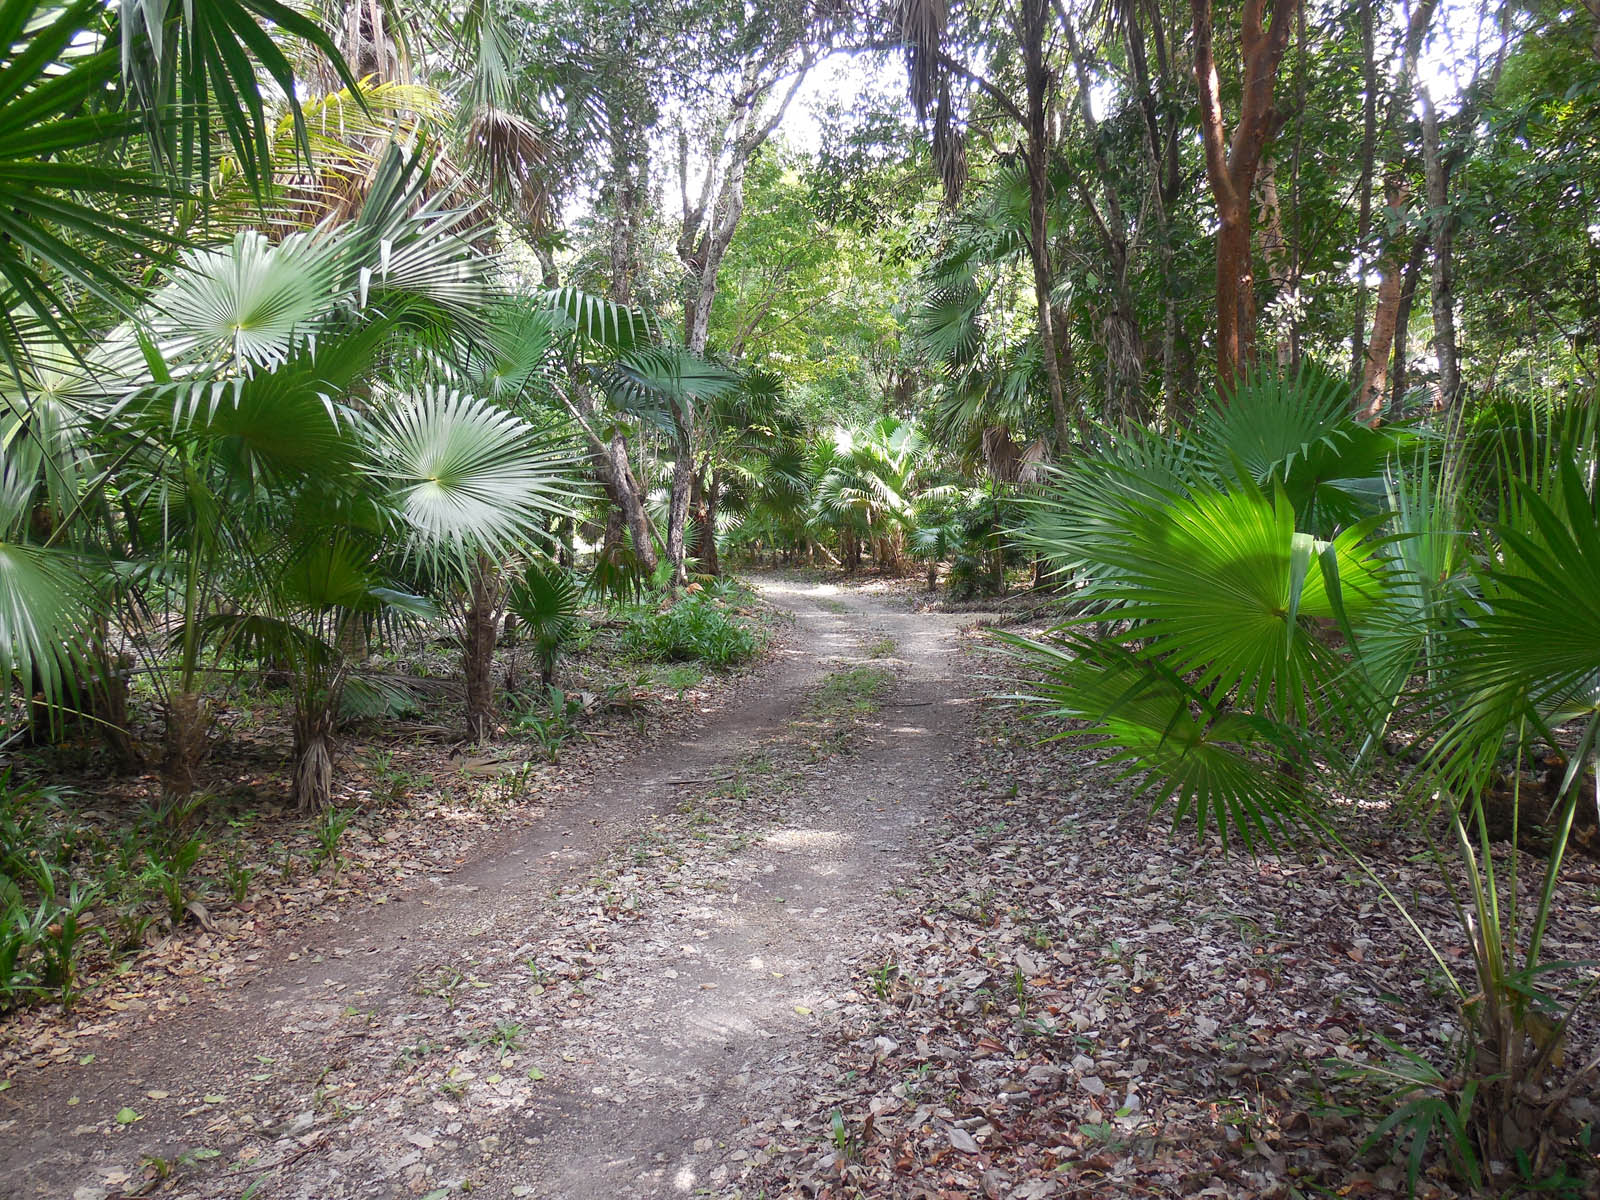 Mayan Seaside Entrance Park